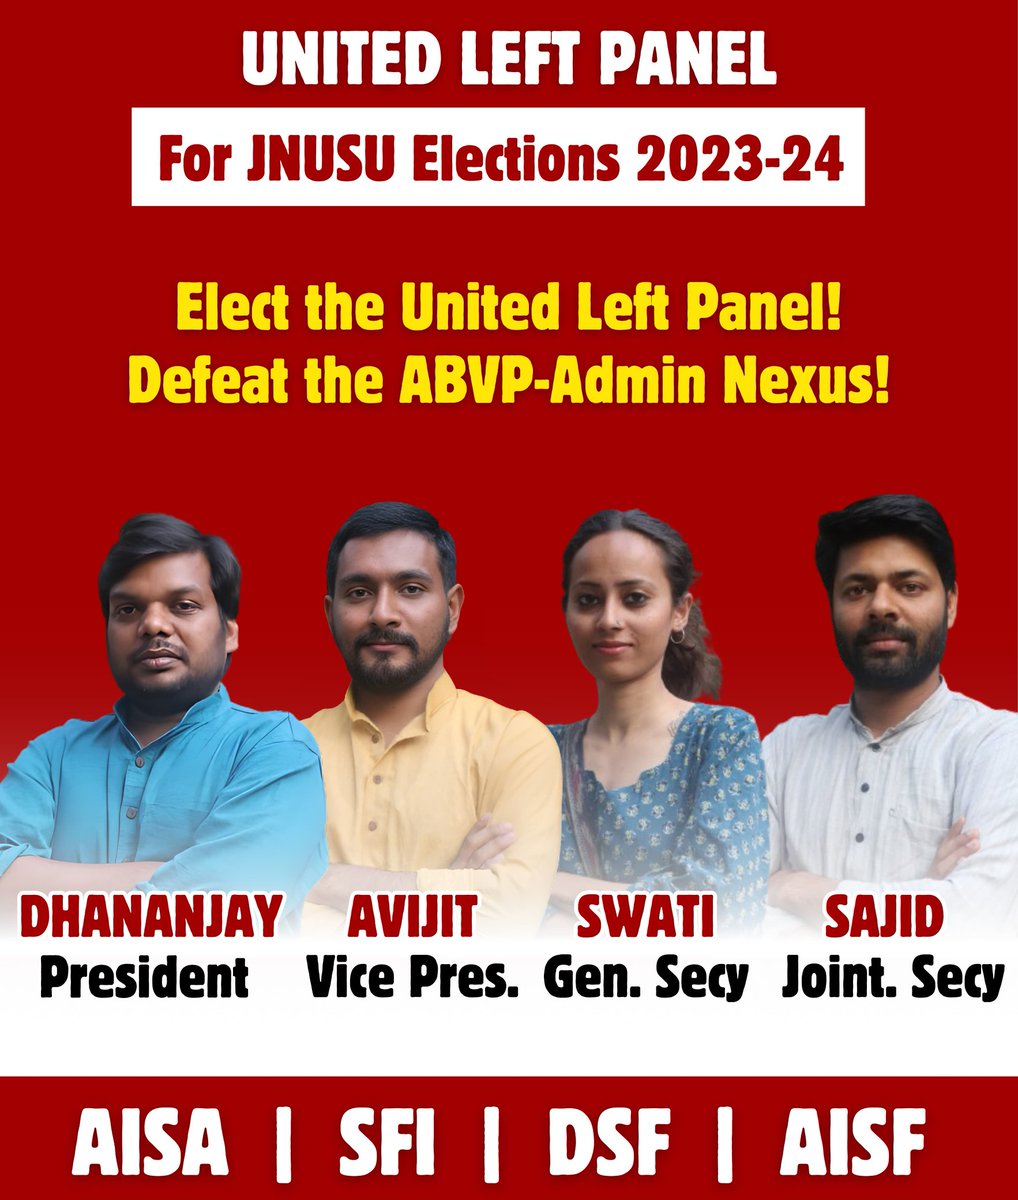 Onwards to JNUSU elections! 
Left Unity Long Live! @sfijnuunit